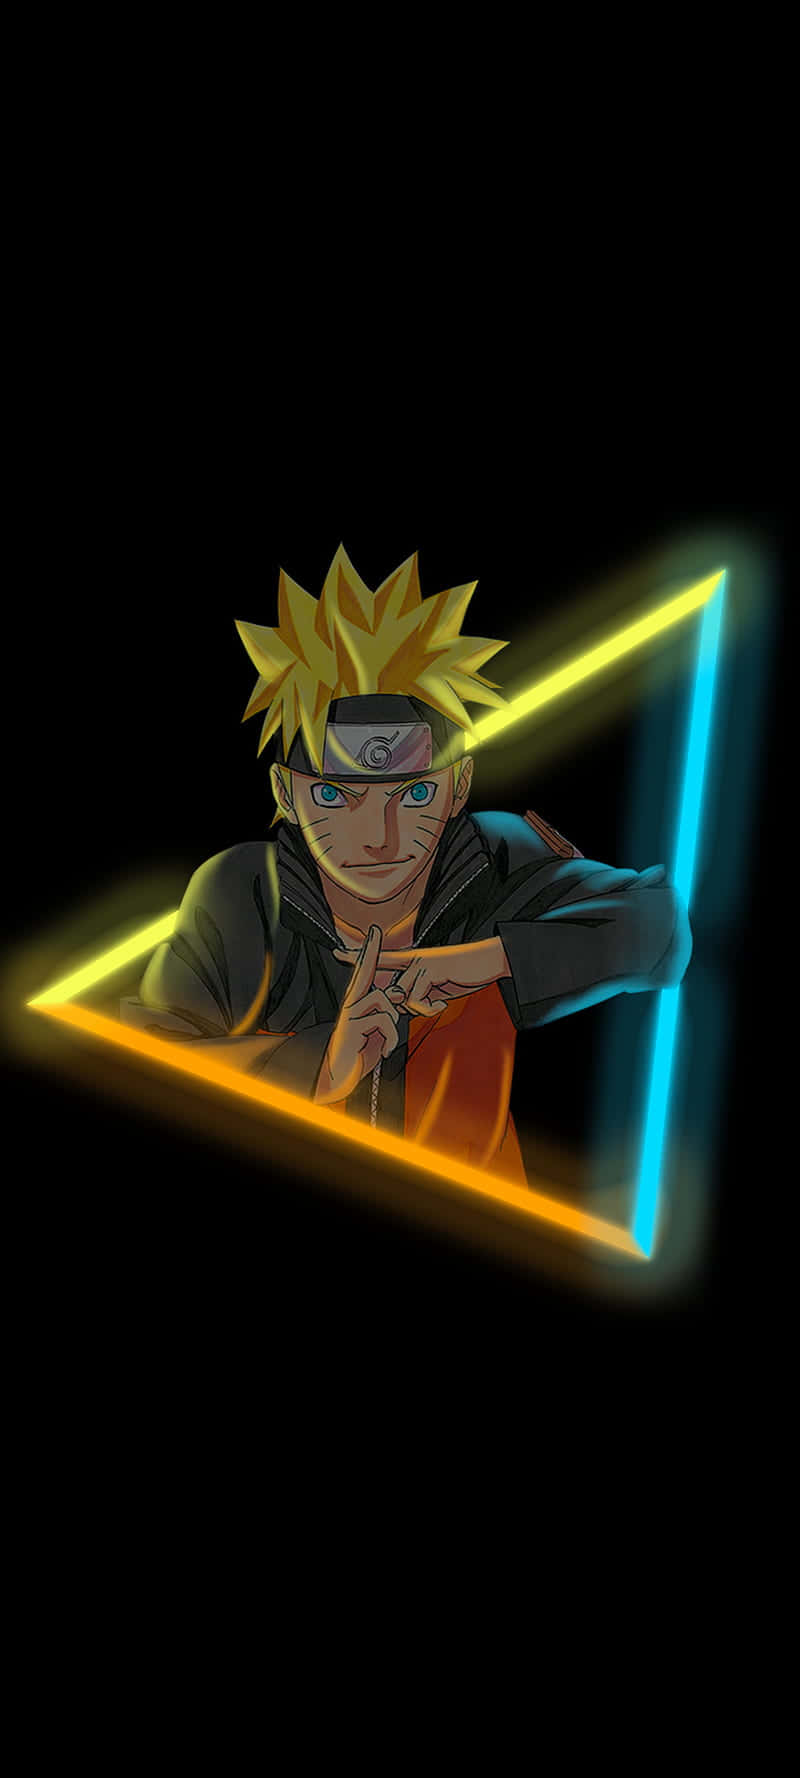 Caption: "Radiant Neon Glow Anime Art Featuring Naruto Uzumaki" Wallpaper